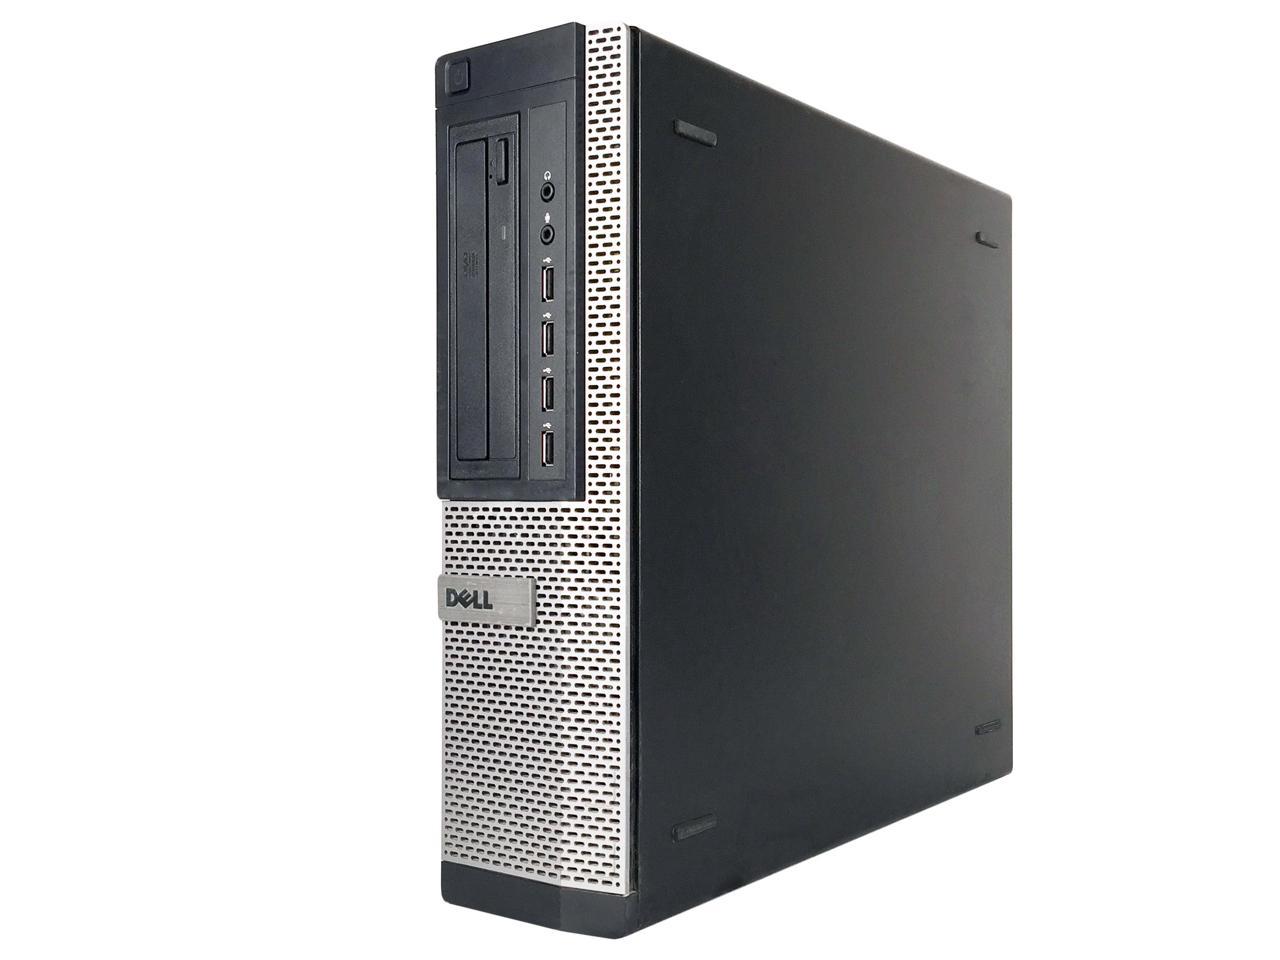 Refurbished Dell Grade A OptiPlex 990 Desktop Computer, Intel Core I5-2500 (3.3 GHz), 4G DDR3, 160G HDD, DVD, Windows 10 Pro 64-bit (English/Spanish), 1 Year Warranty